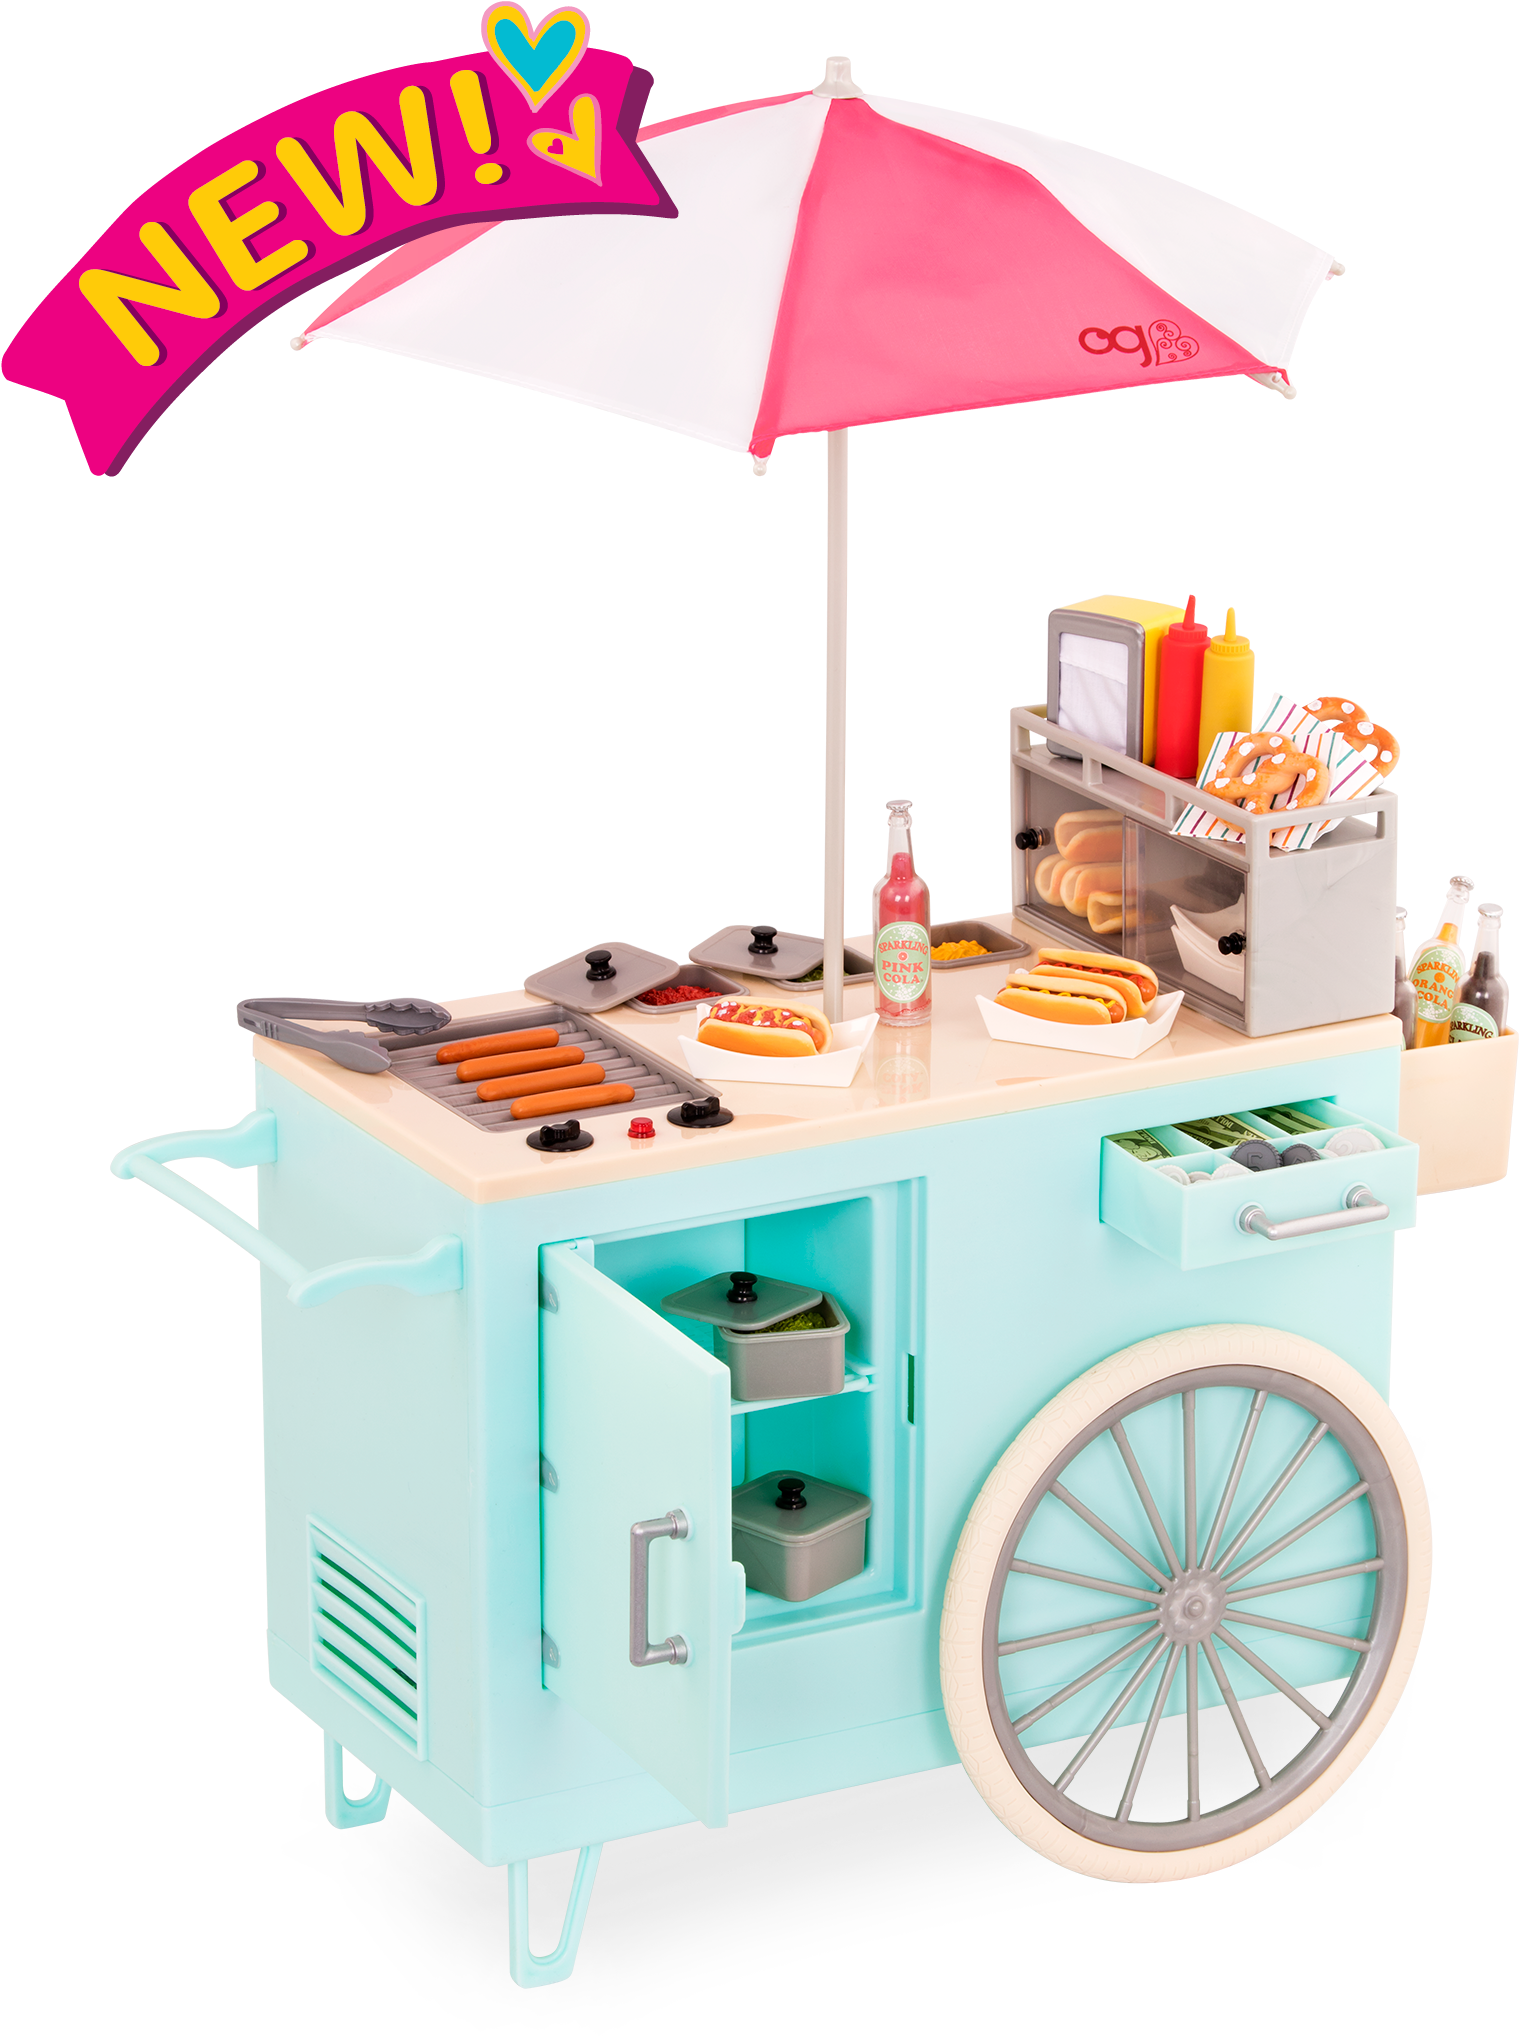 Retro Hot Dog Cart - Our Generation Hot Dog Cart (2100x2100)